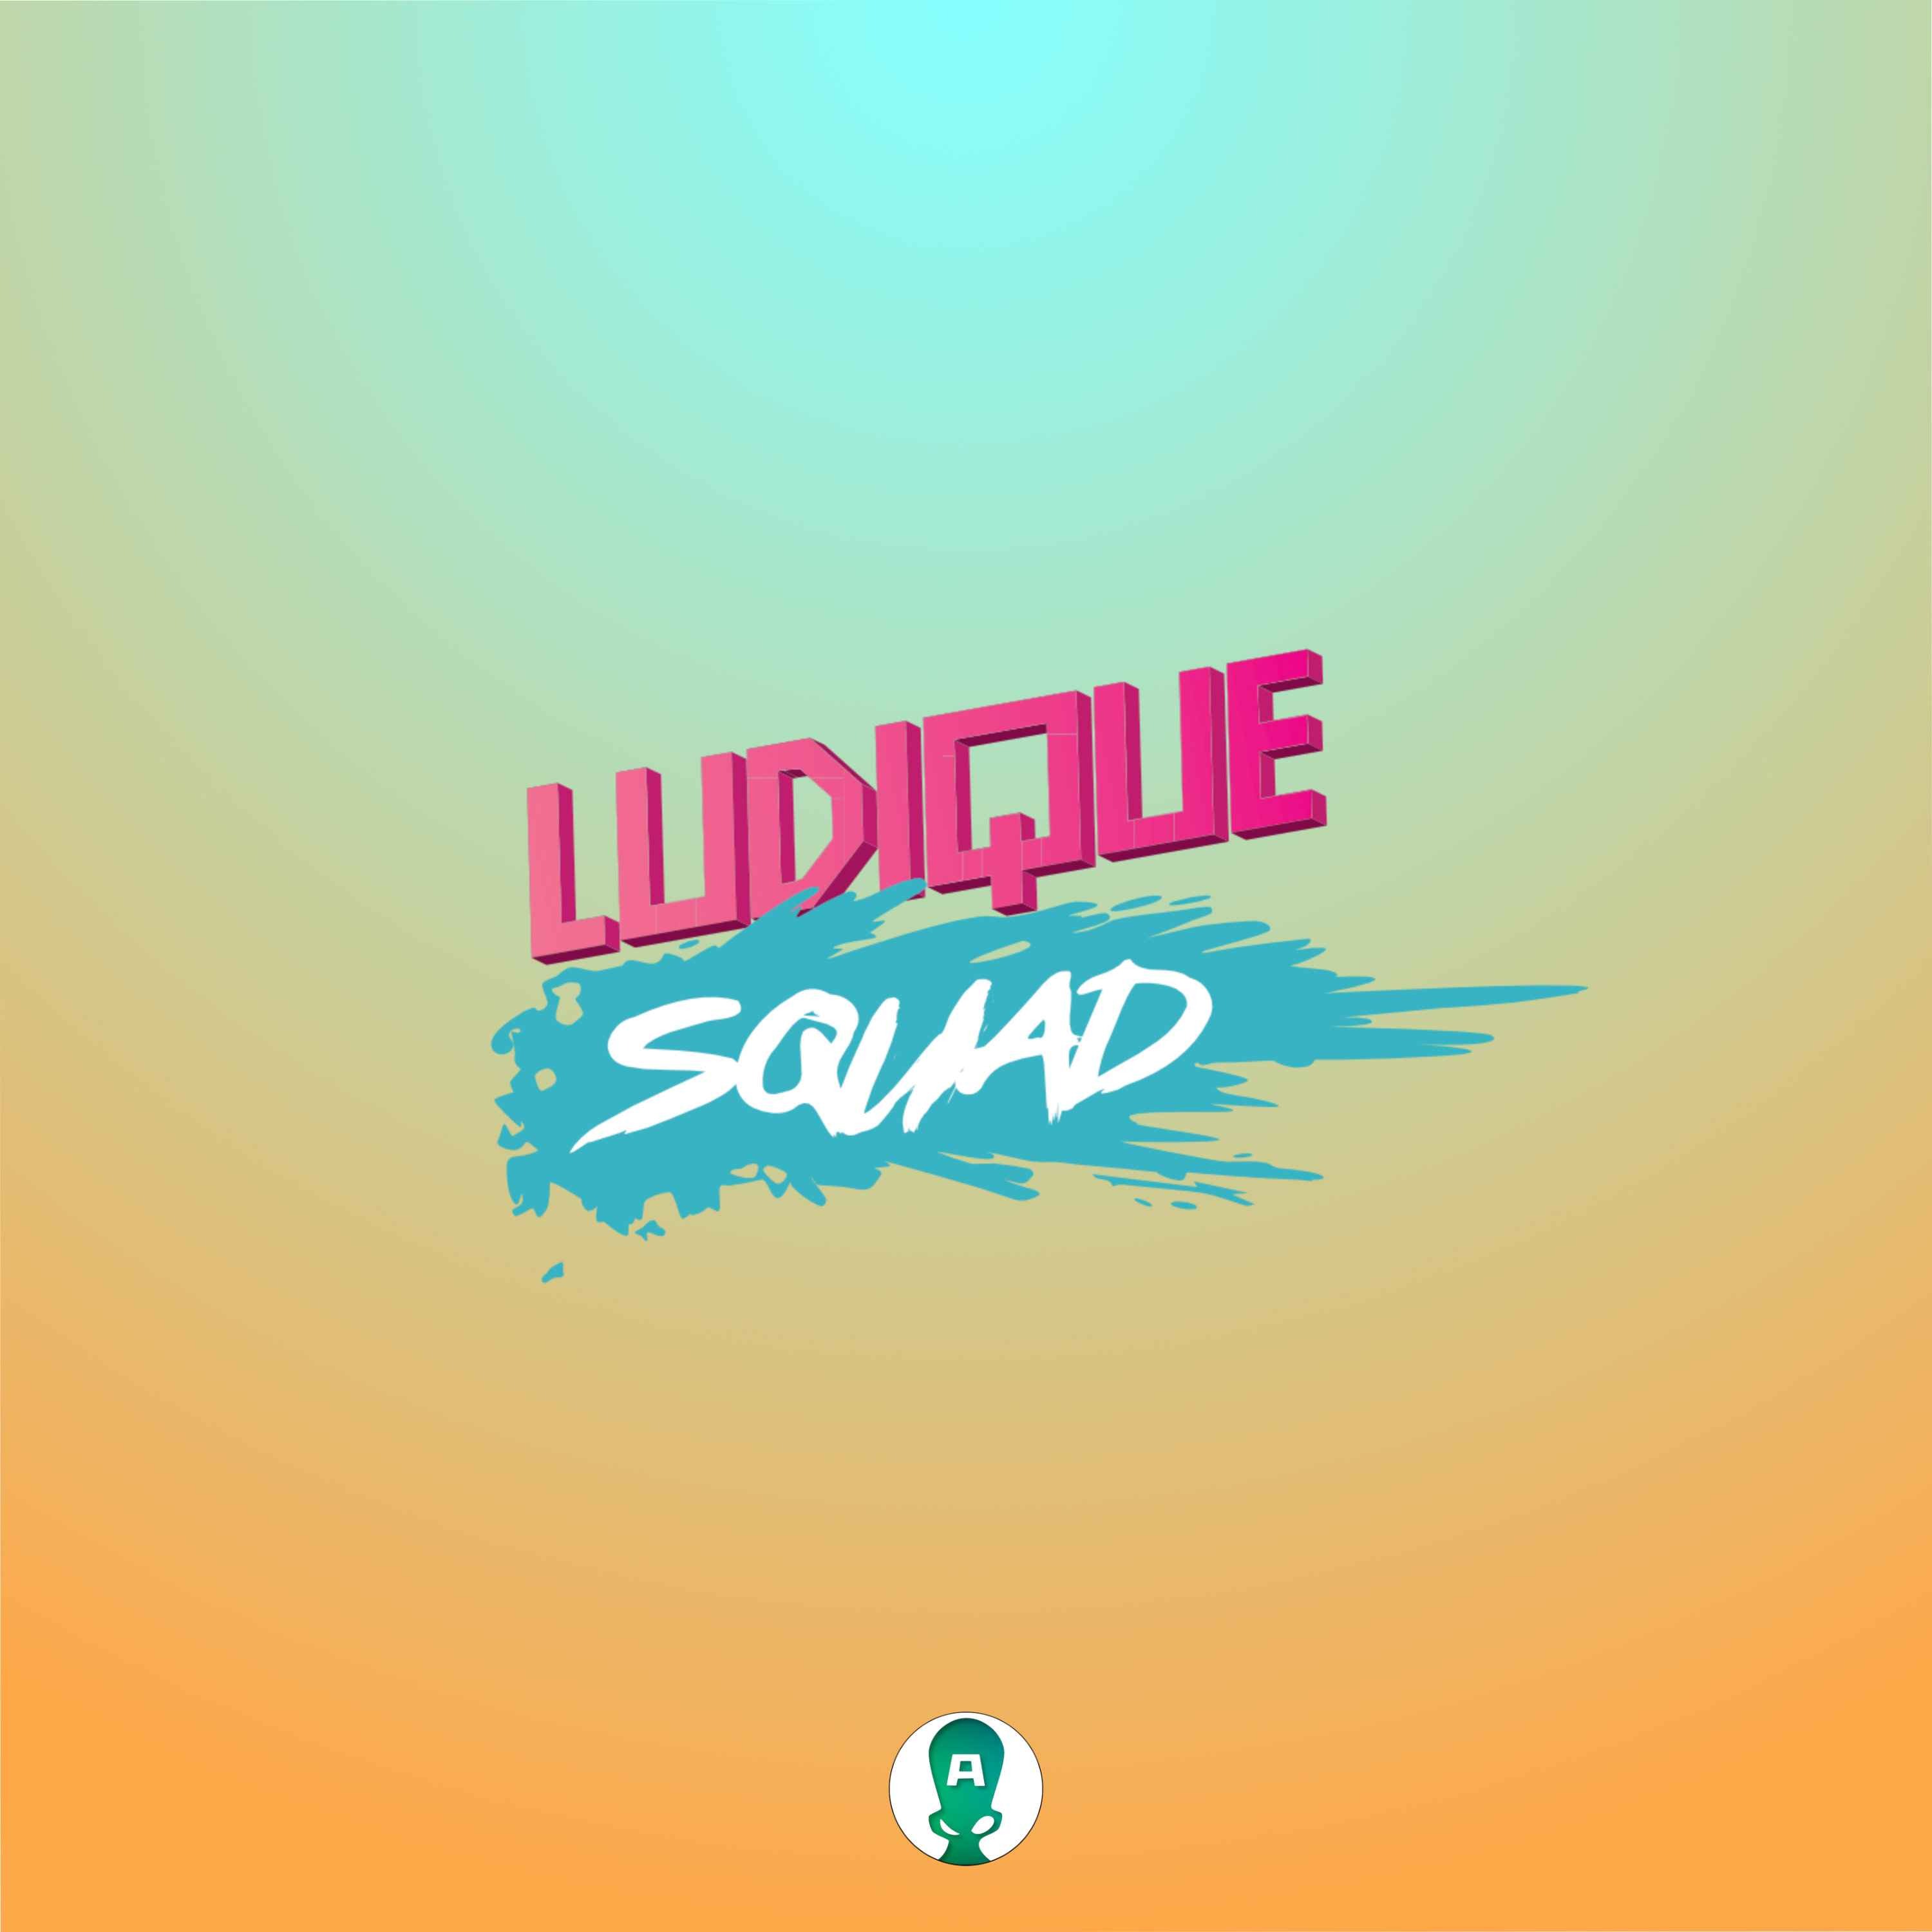 Ludique Squad podcast show image